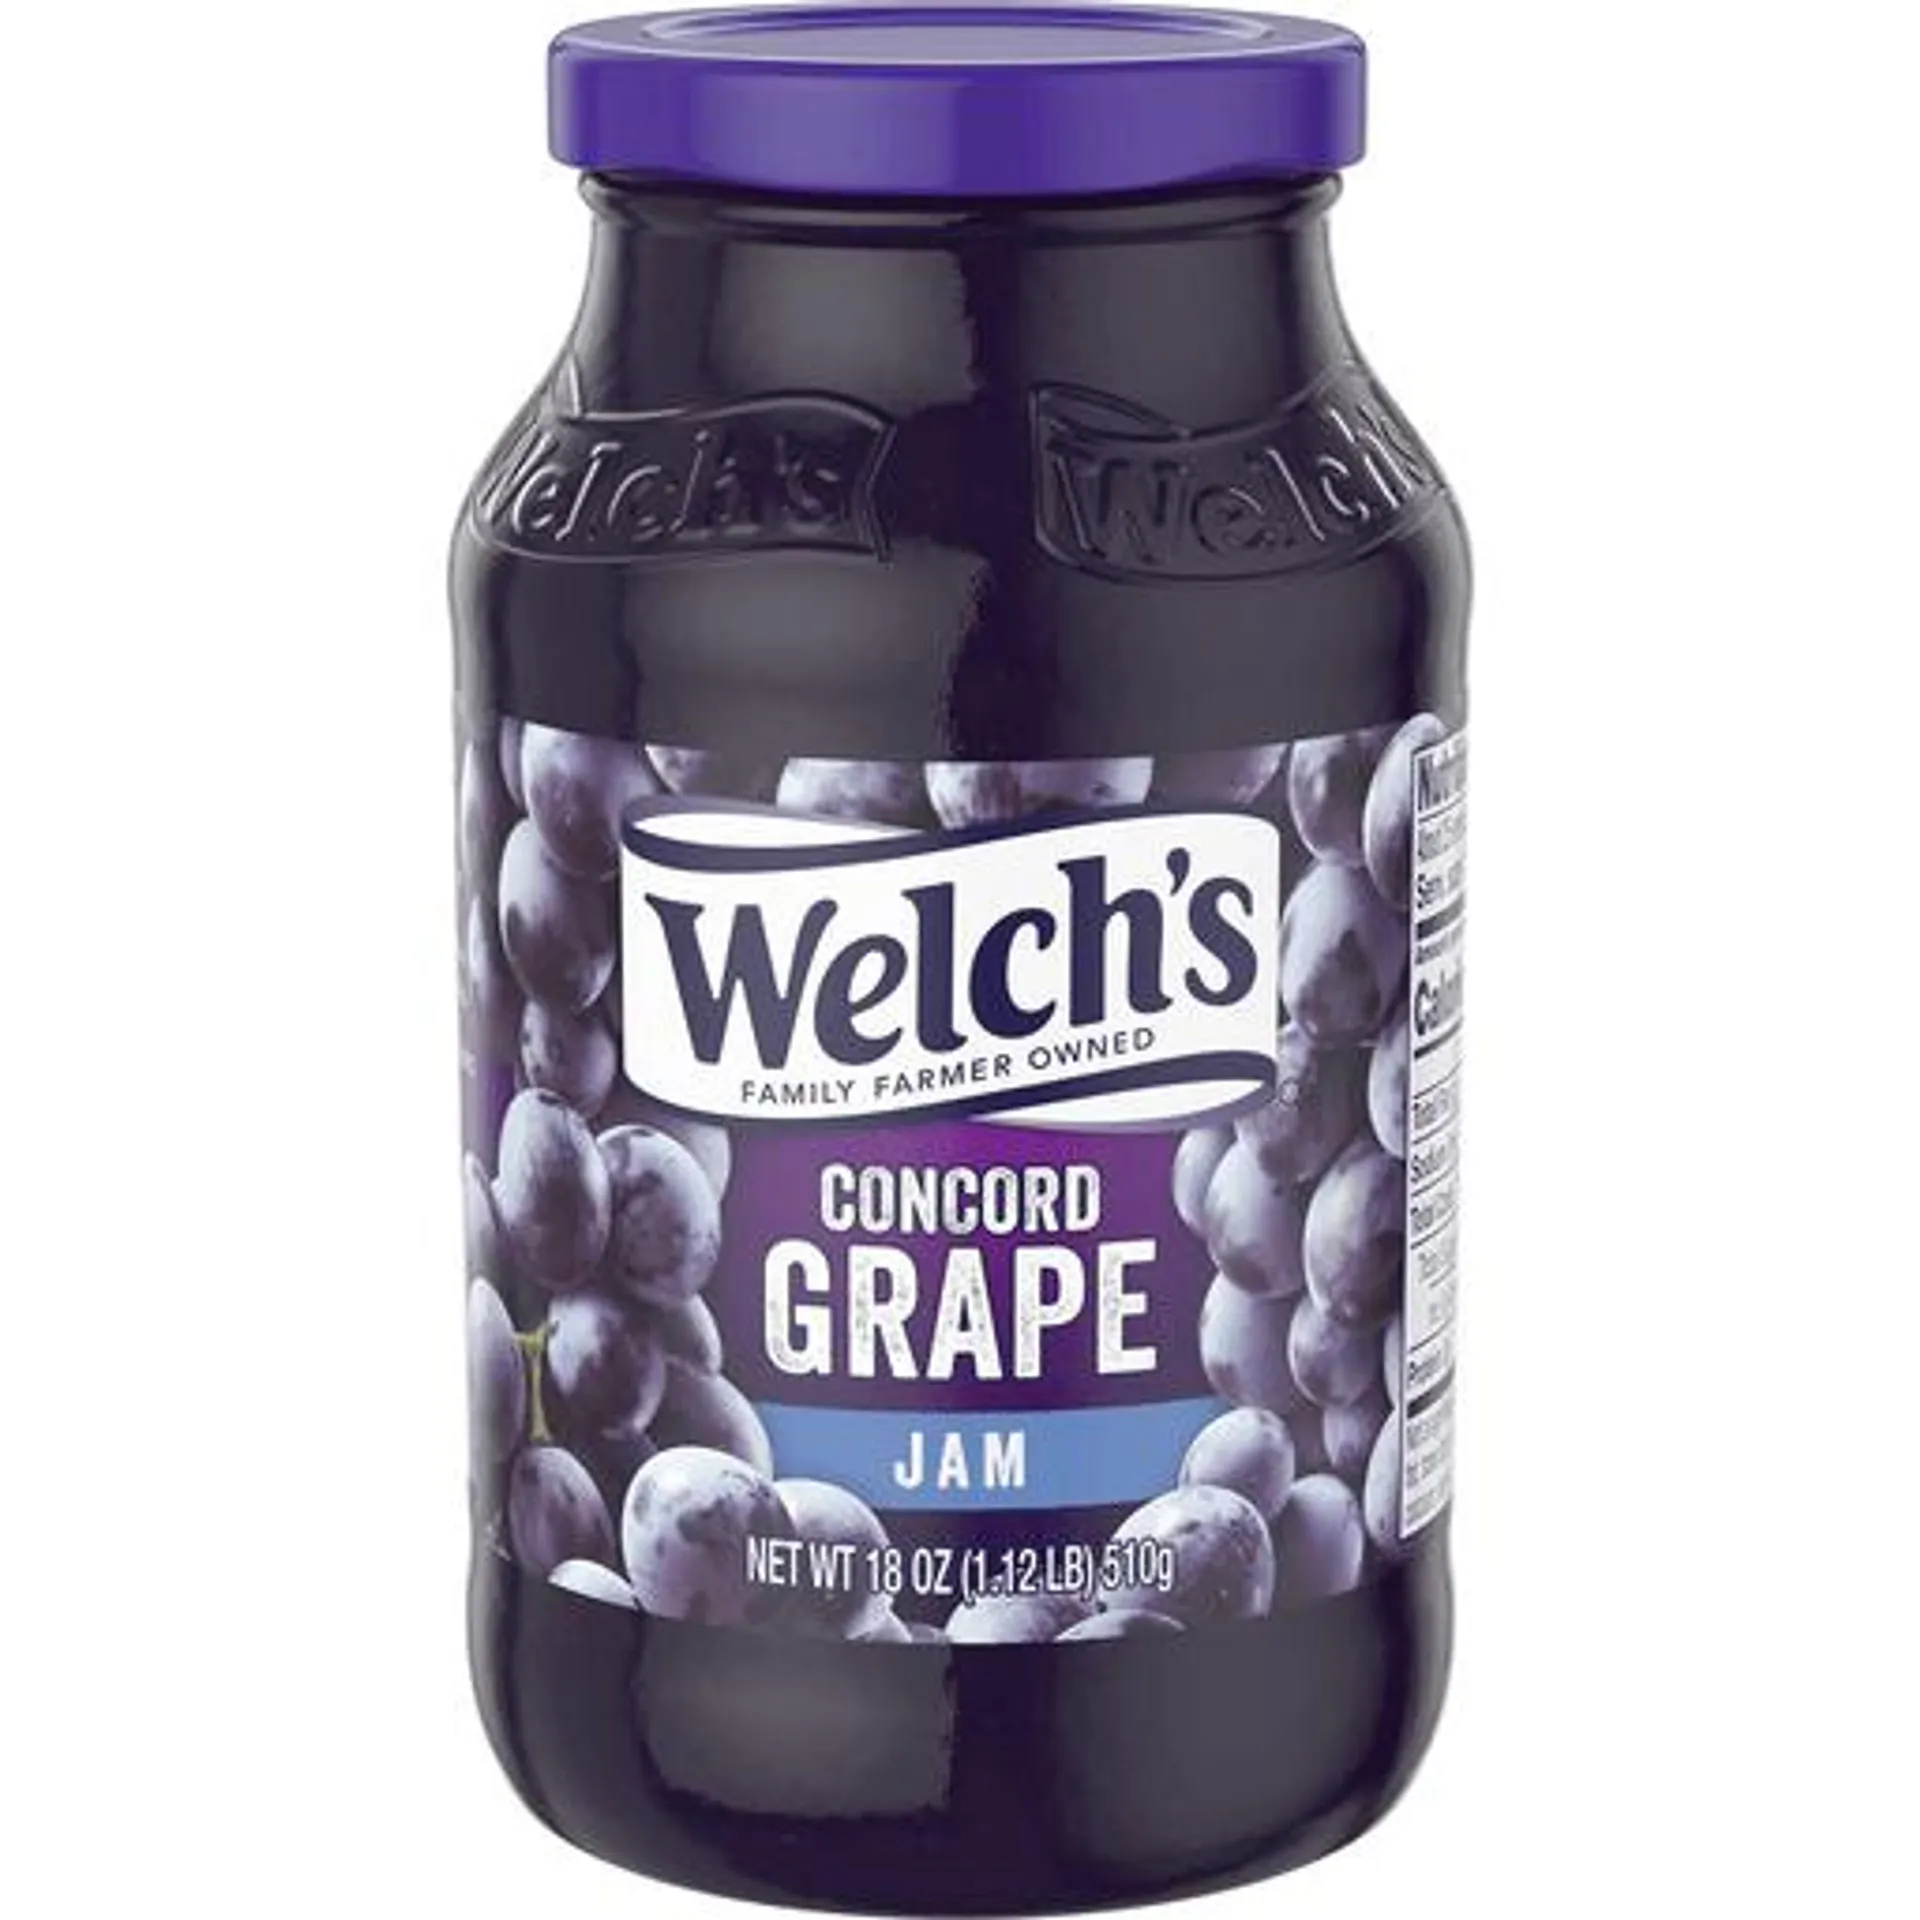 Welch's Concord Grape Jam, 18 Oz Jar